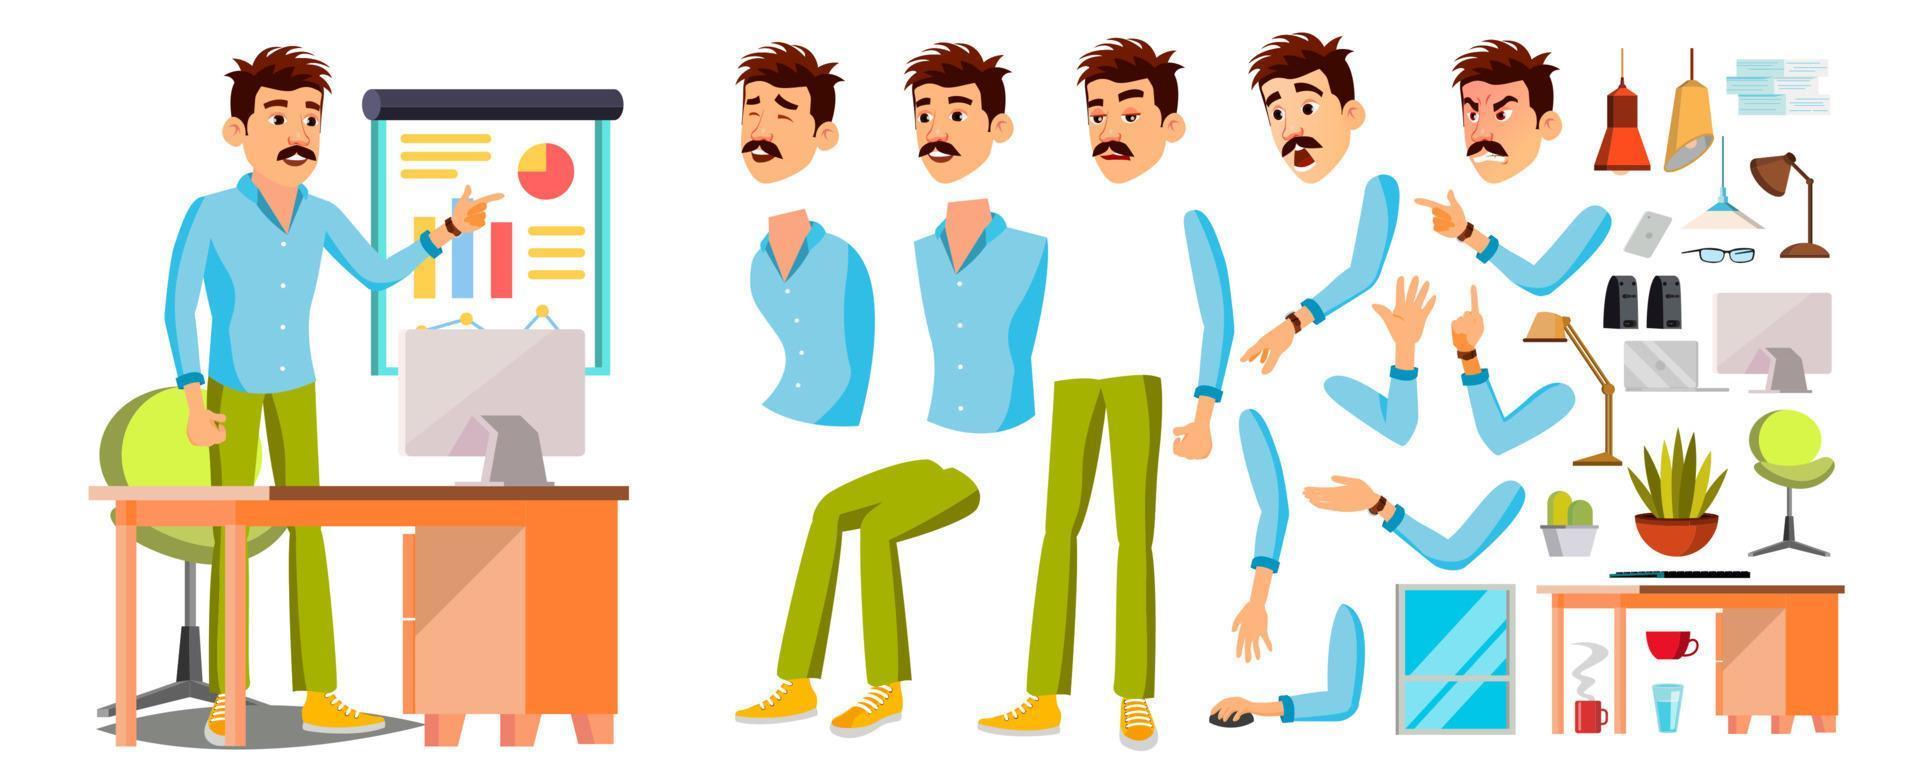 Business Man Worker Character Vector. Working Male. Office Worker. Animation Set. Clerk, Salesman, Designer. Face Emotions, Expressions. Cartoon Illustration vector